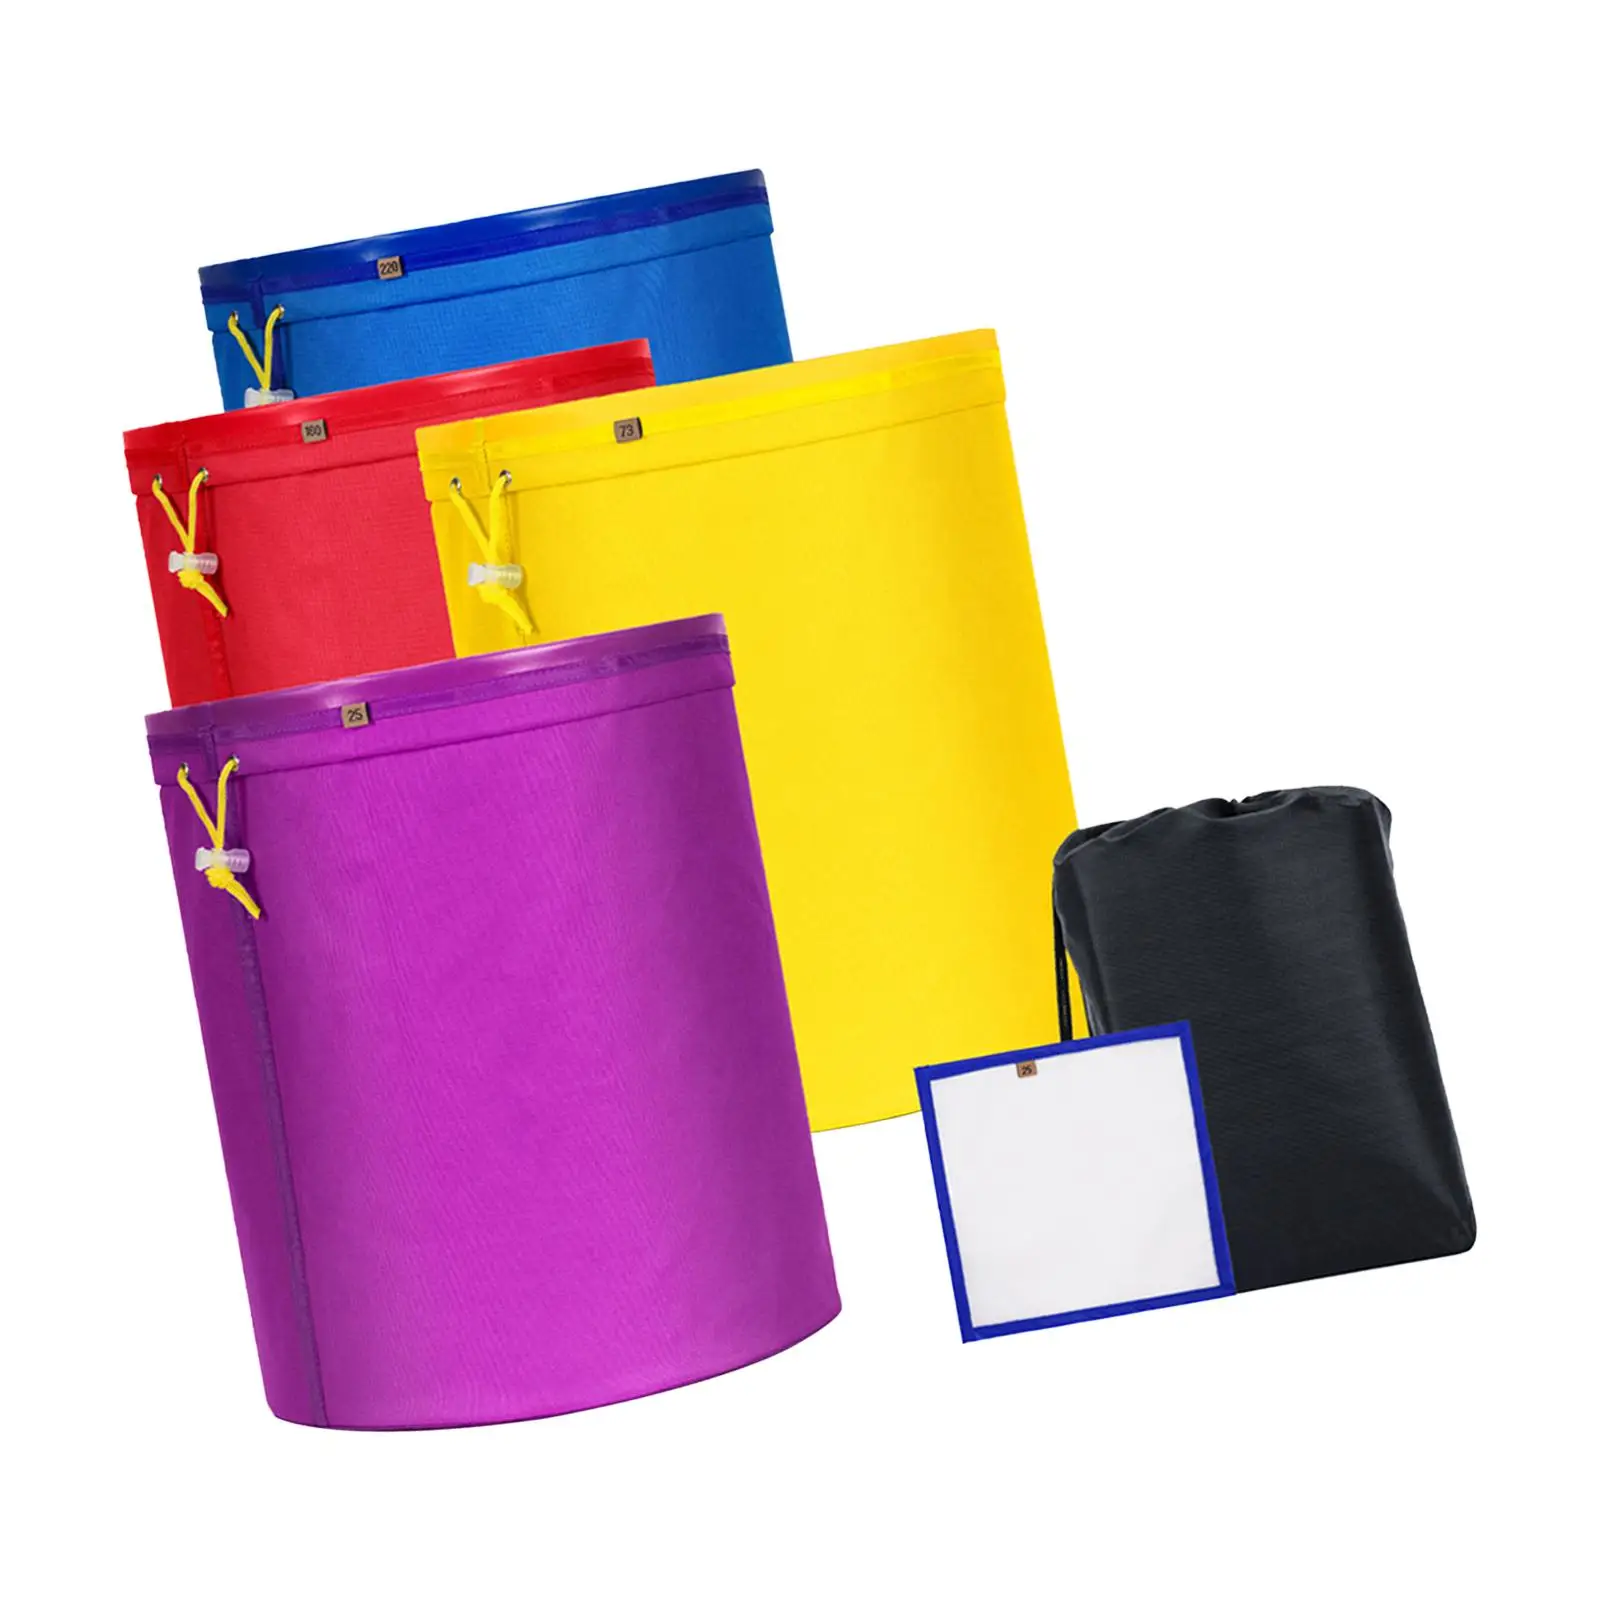 

4 Pieces 5 Gallon Filter Bag Sturdy 25 Micron Press Screen Breathable Mesh Ventilation 25 73 160 220 Micron Oxford Cloth